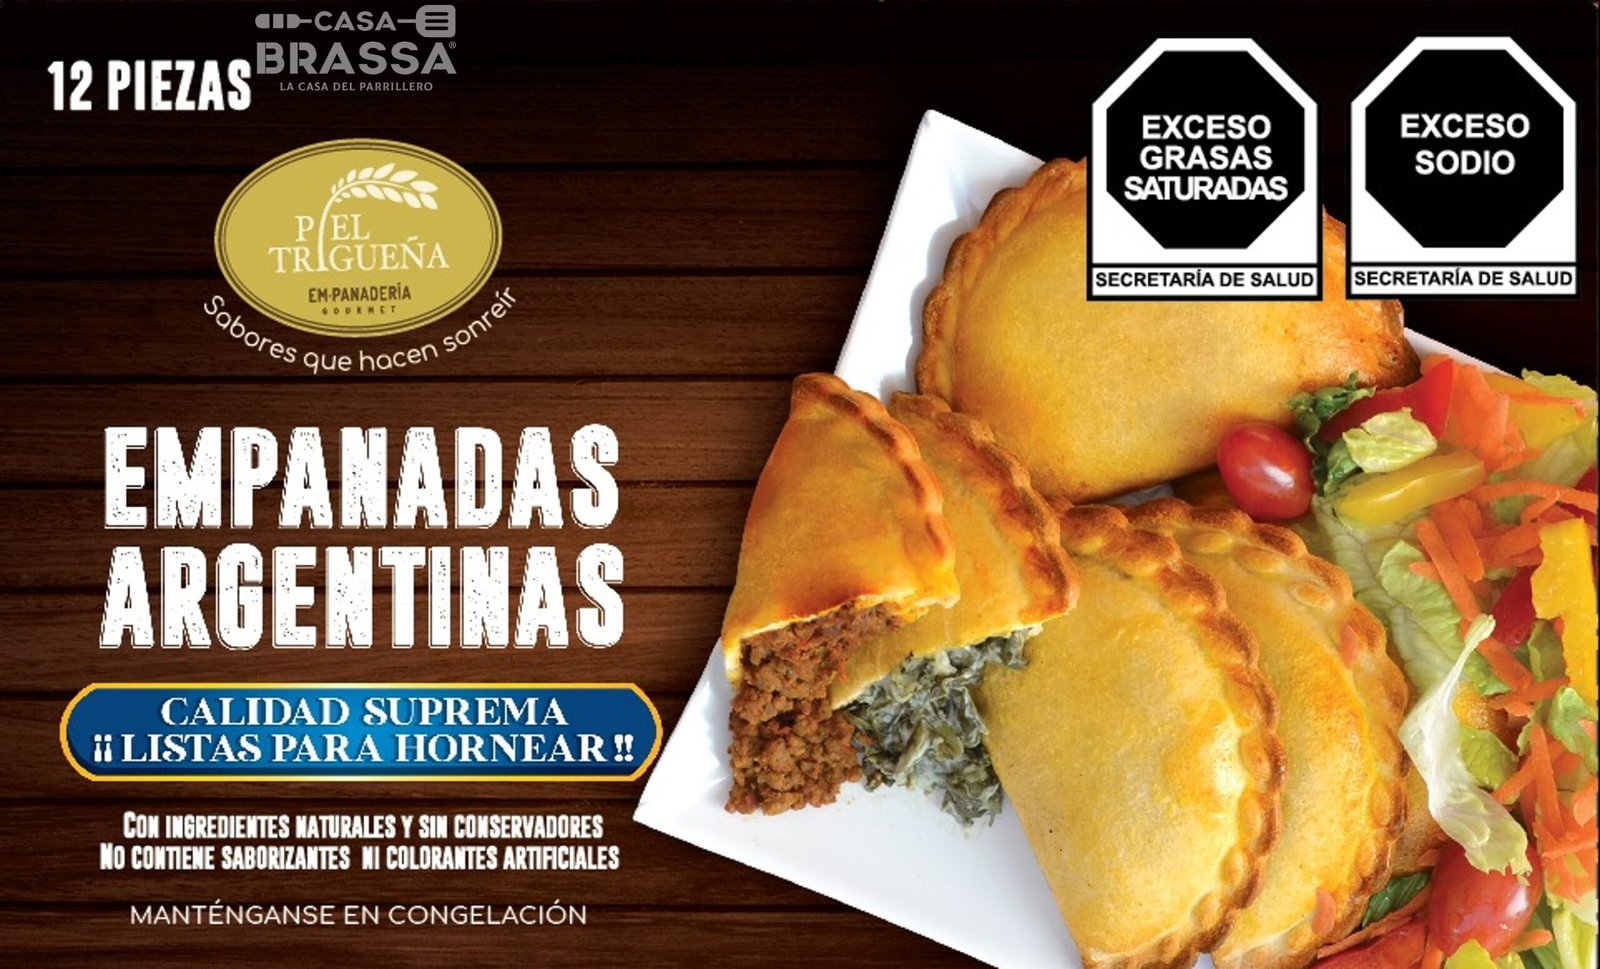 Piel Trigueña, Empanadas Argentinas Gourmet | Casa Brassa